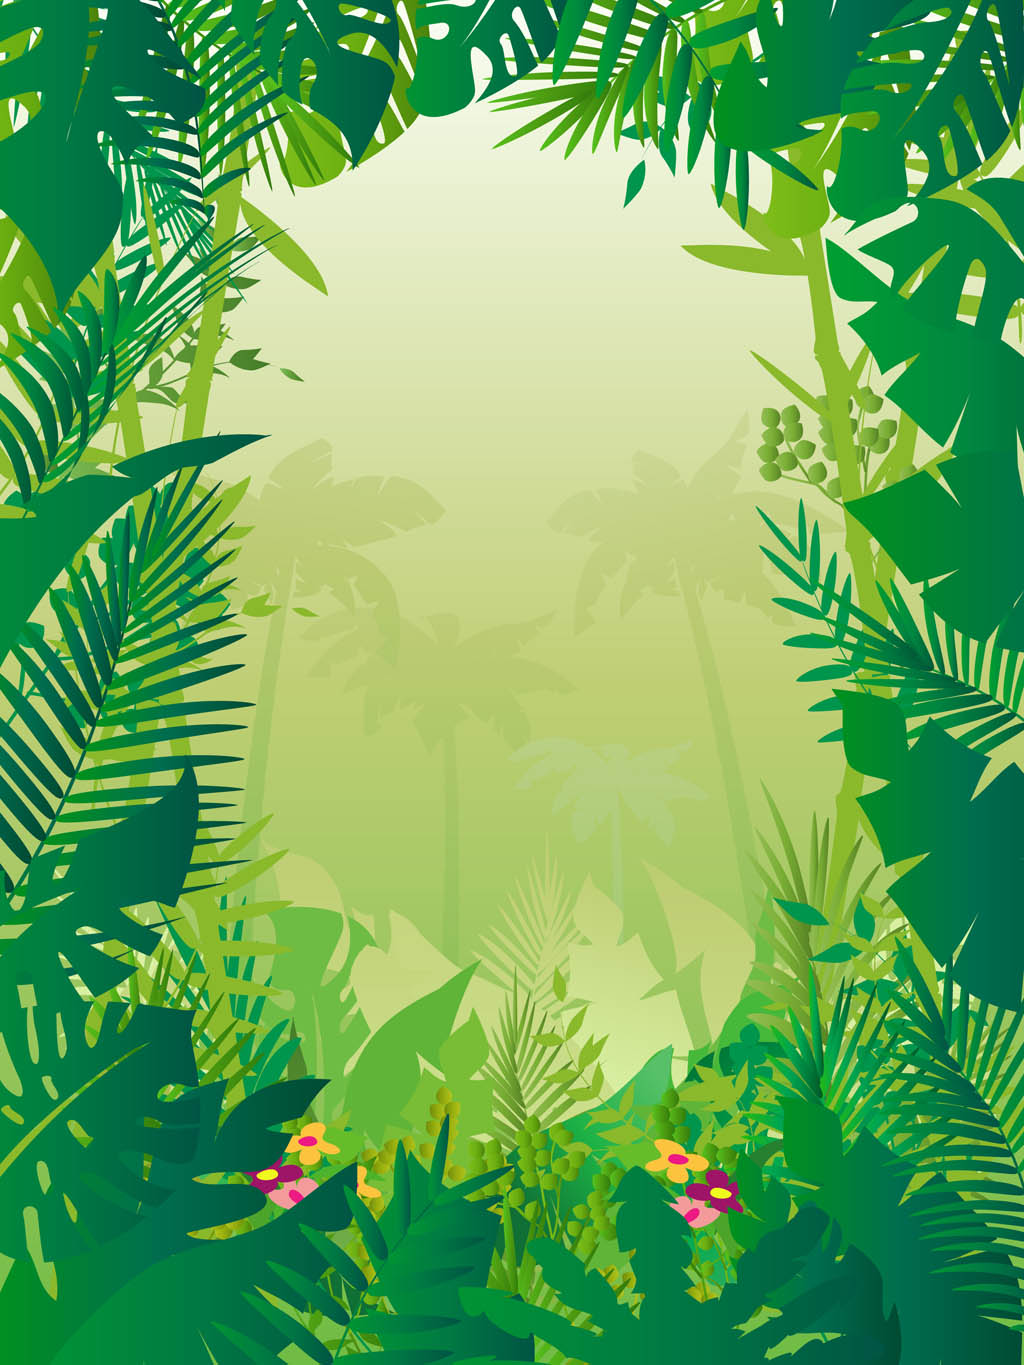 Download Jungle Background Vector Art & Graphics | freevector.com